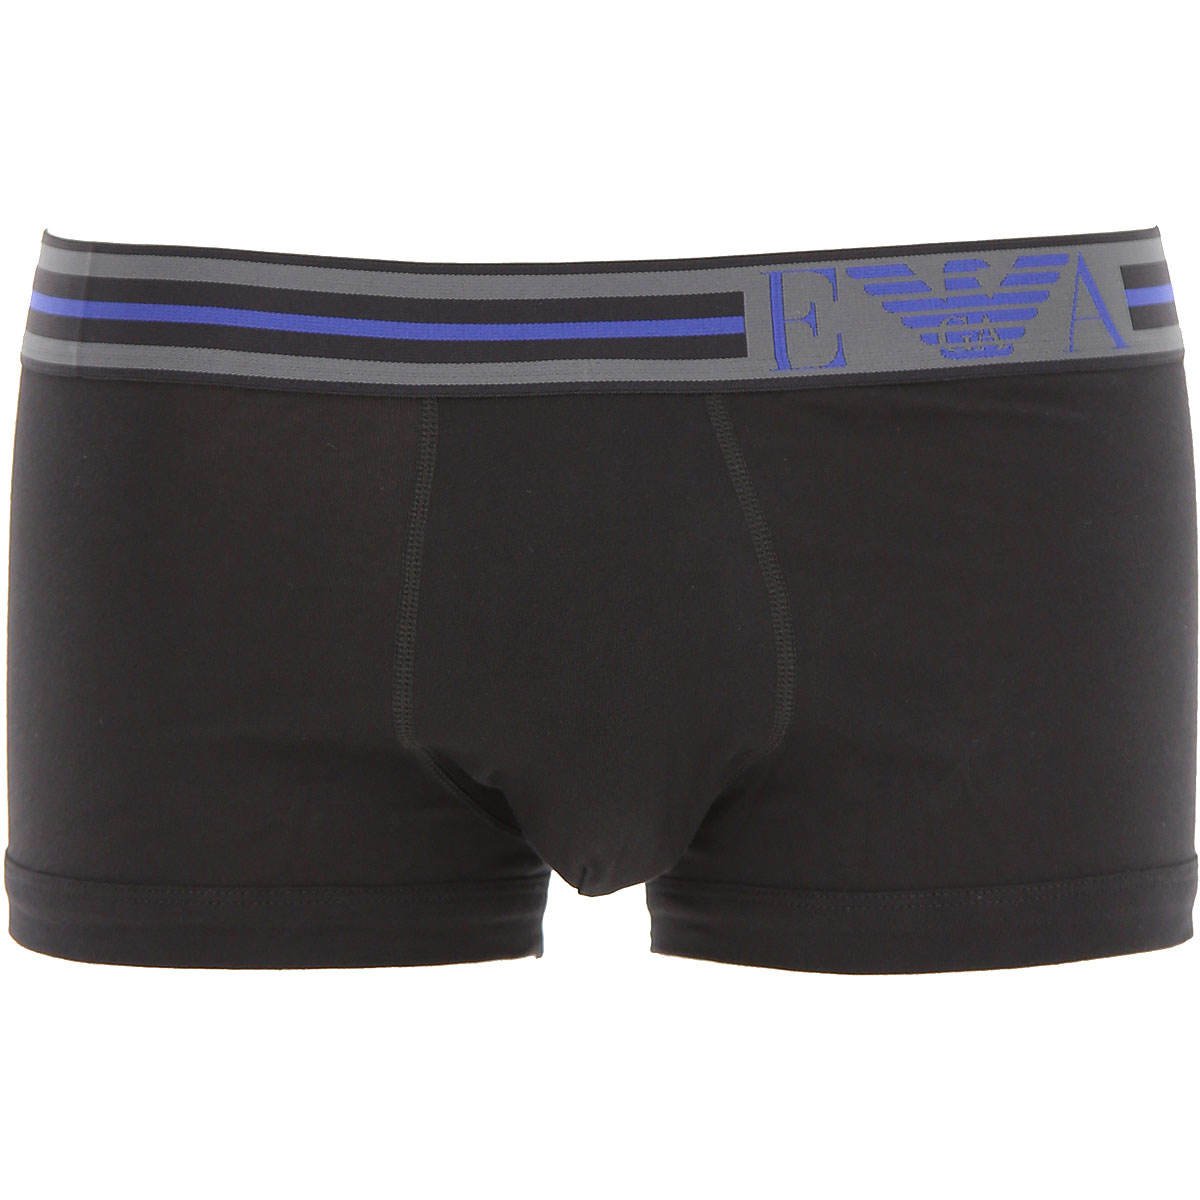 Mens Underwear Emporio Armani, Style code: 111389-8a523-00020